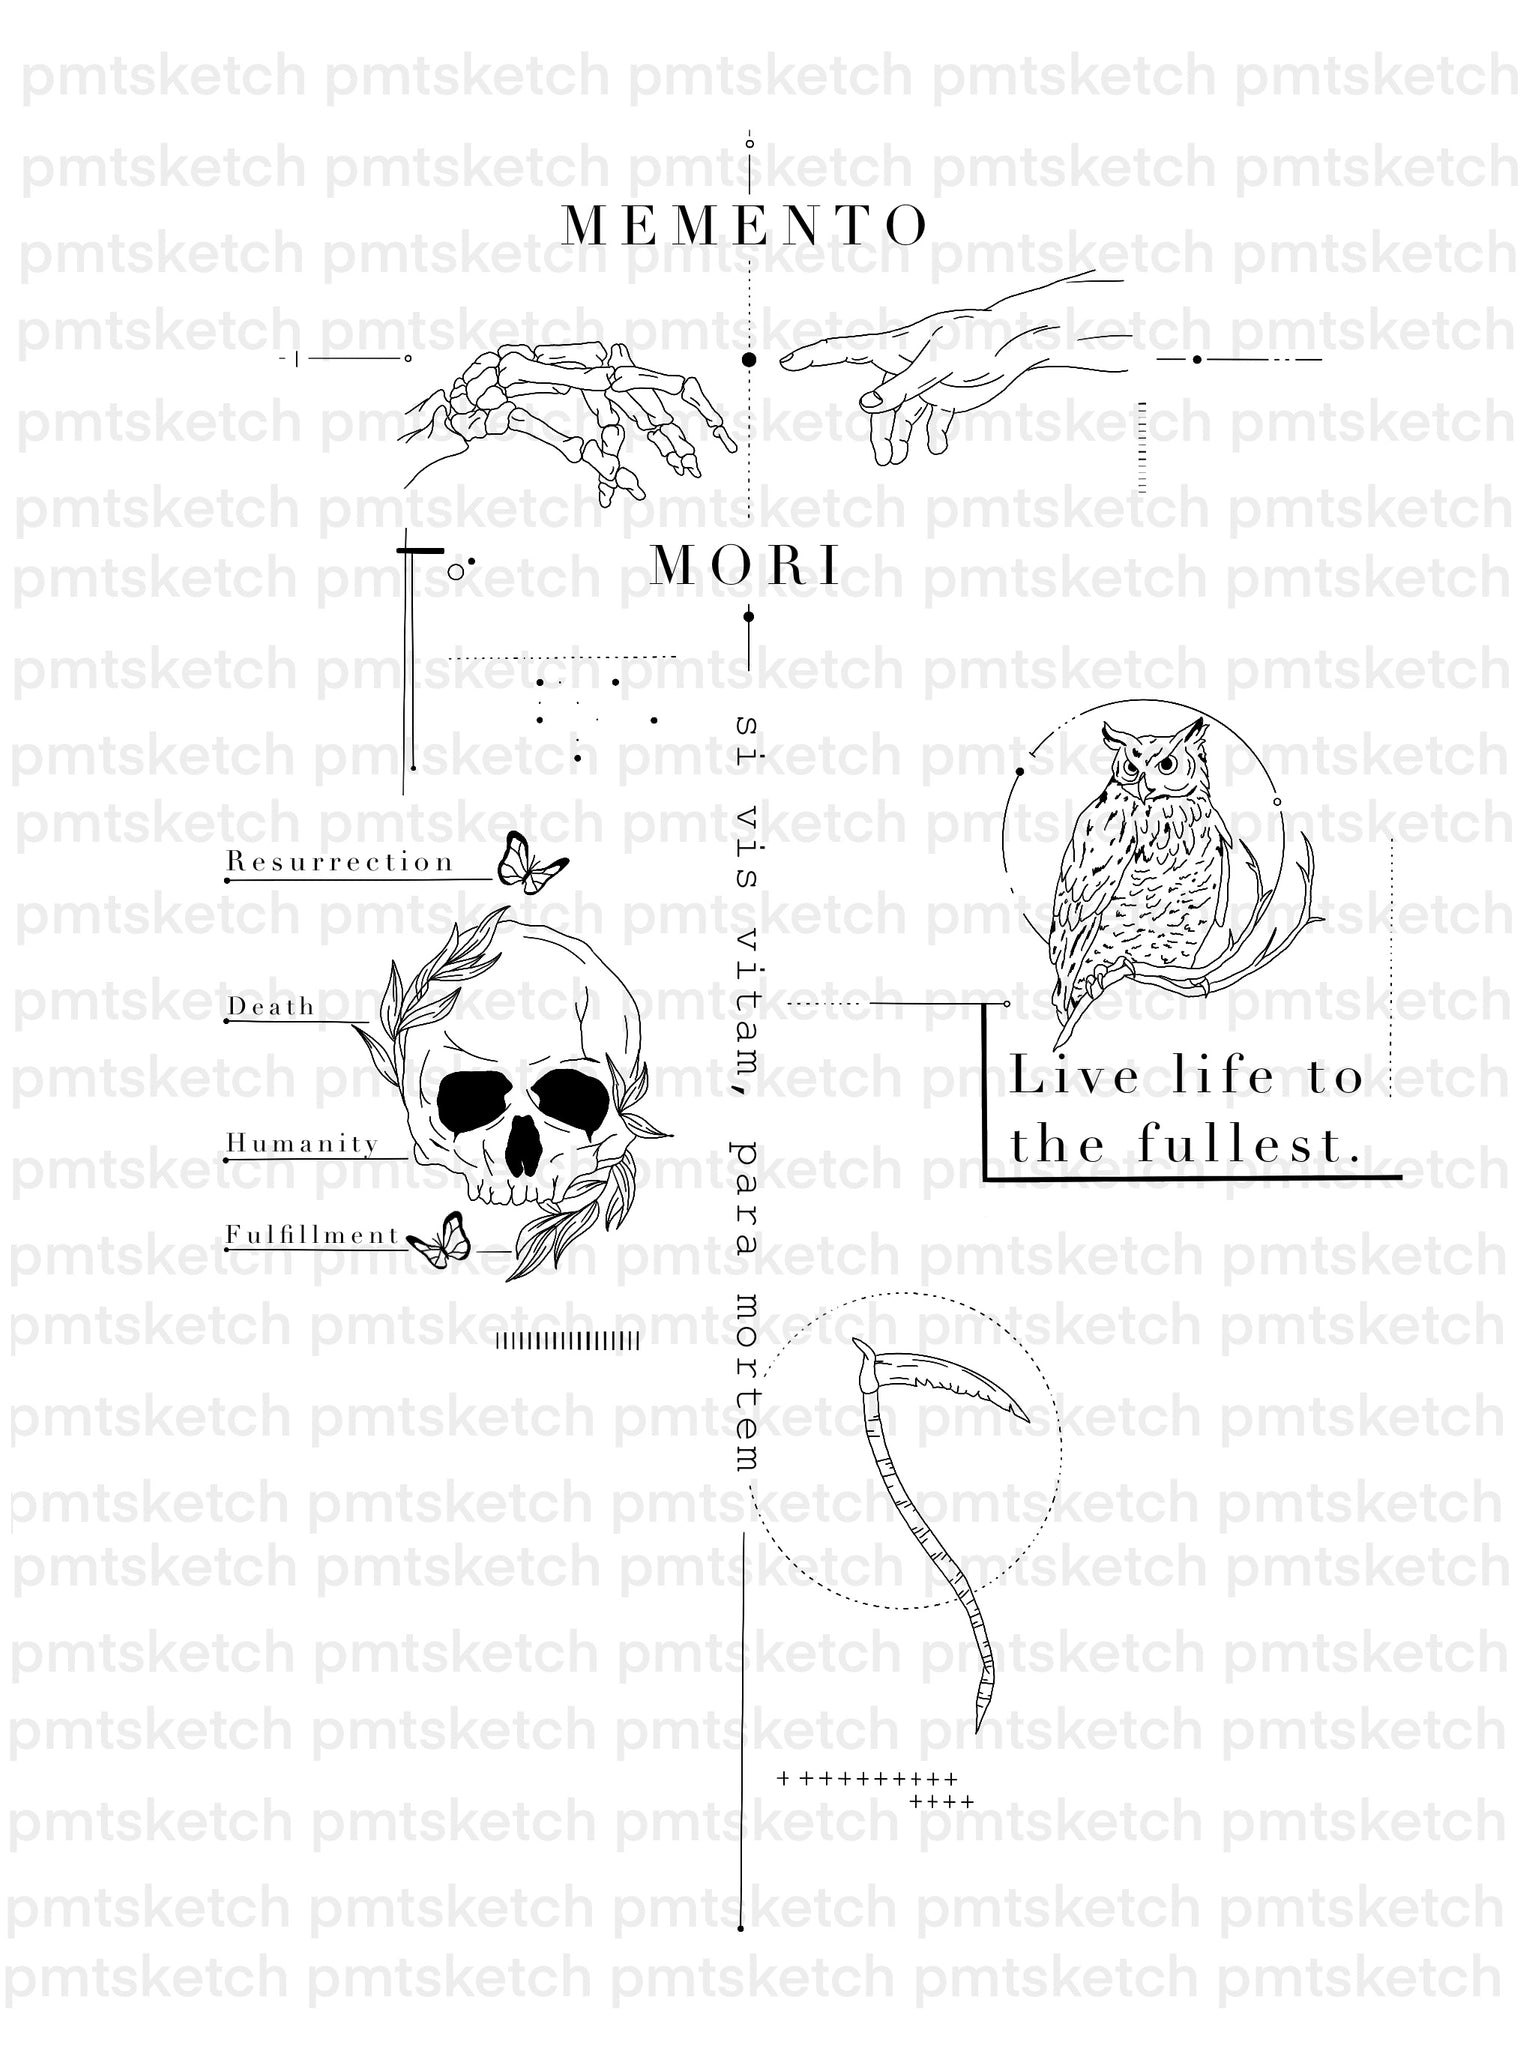 Concept Designs  Page 3  pmtsketch  tattoodesign